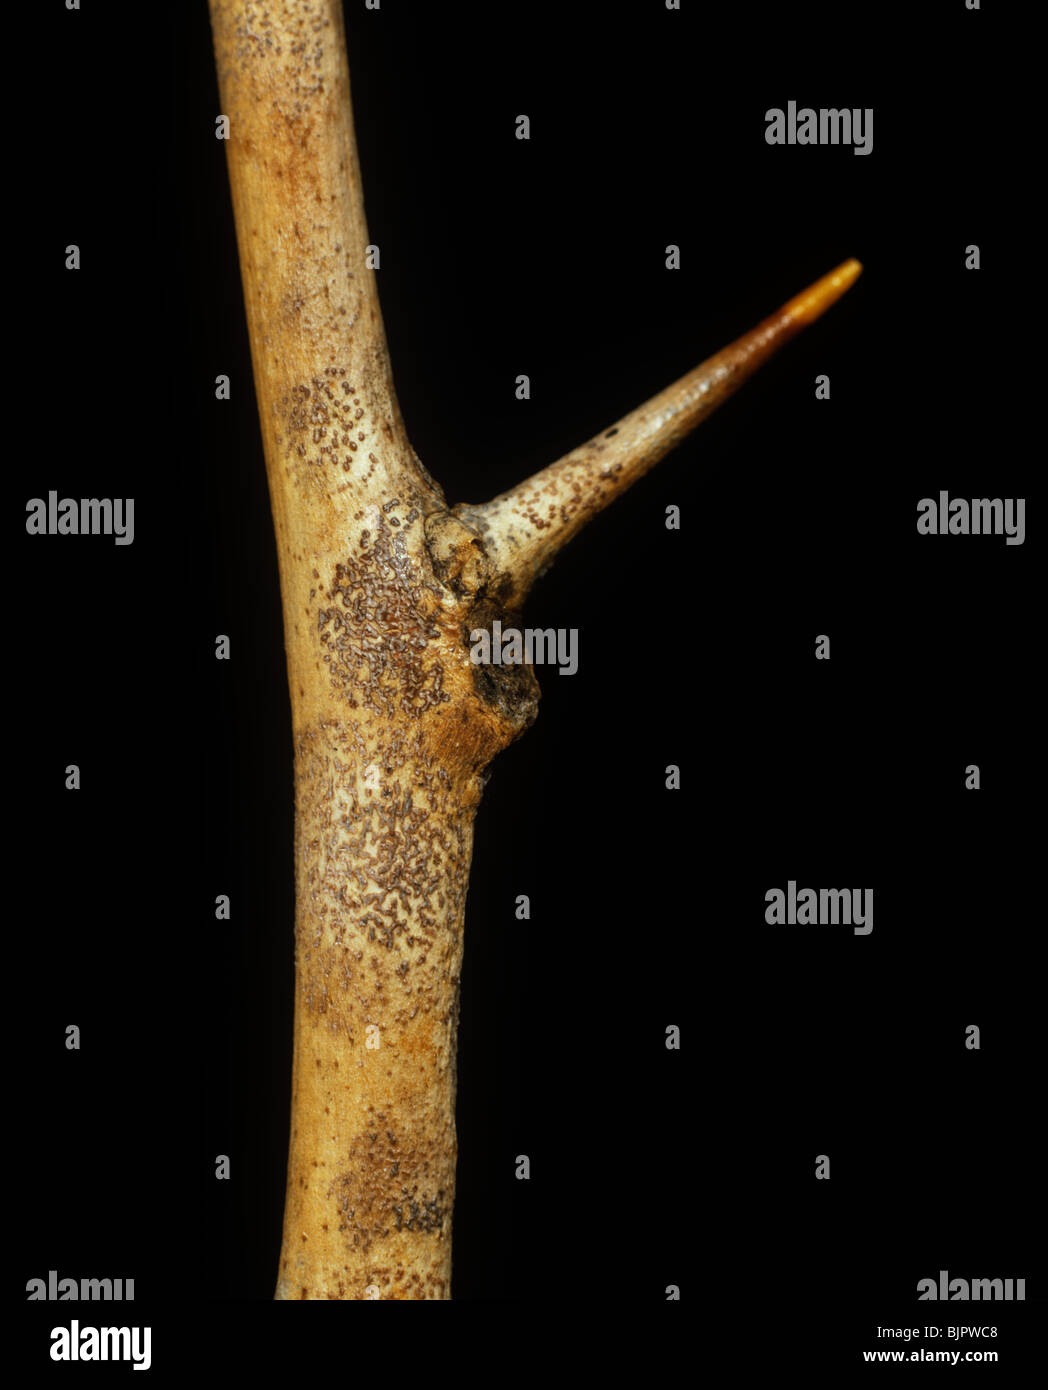 Anthracnose (Colletotrichum gloeosporioides) lesions & pycnidia fruiting bodies on lemon wood Stock Photo